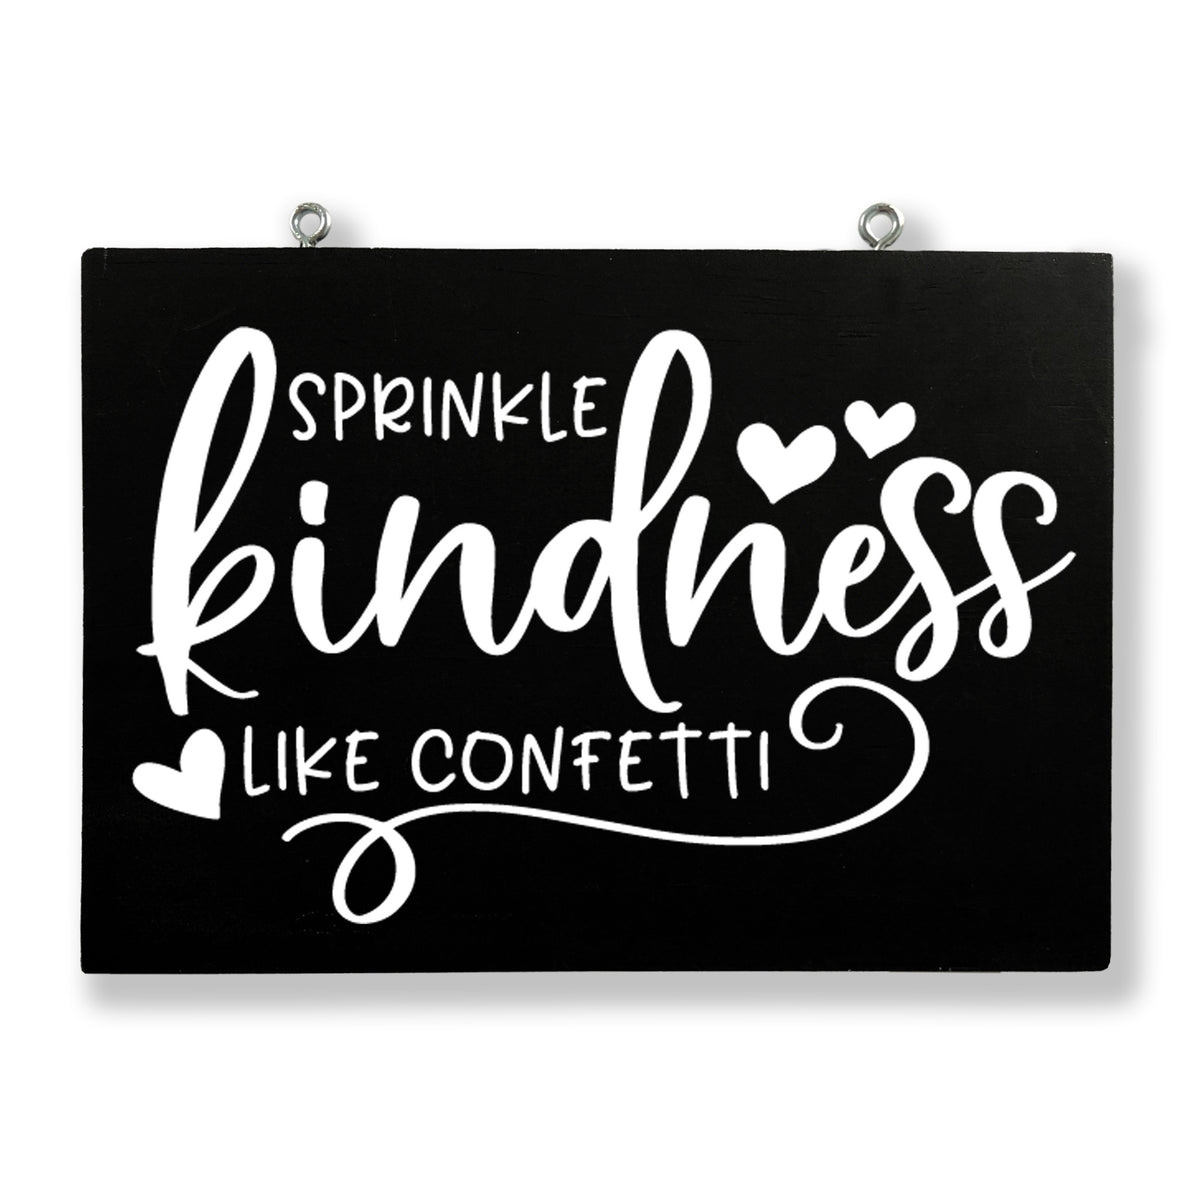 Sprinkle Kindness Like Confetti